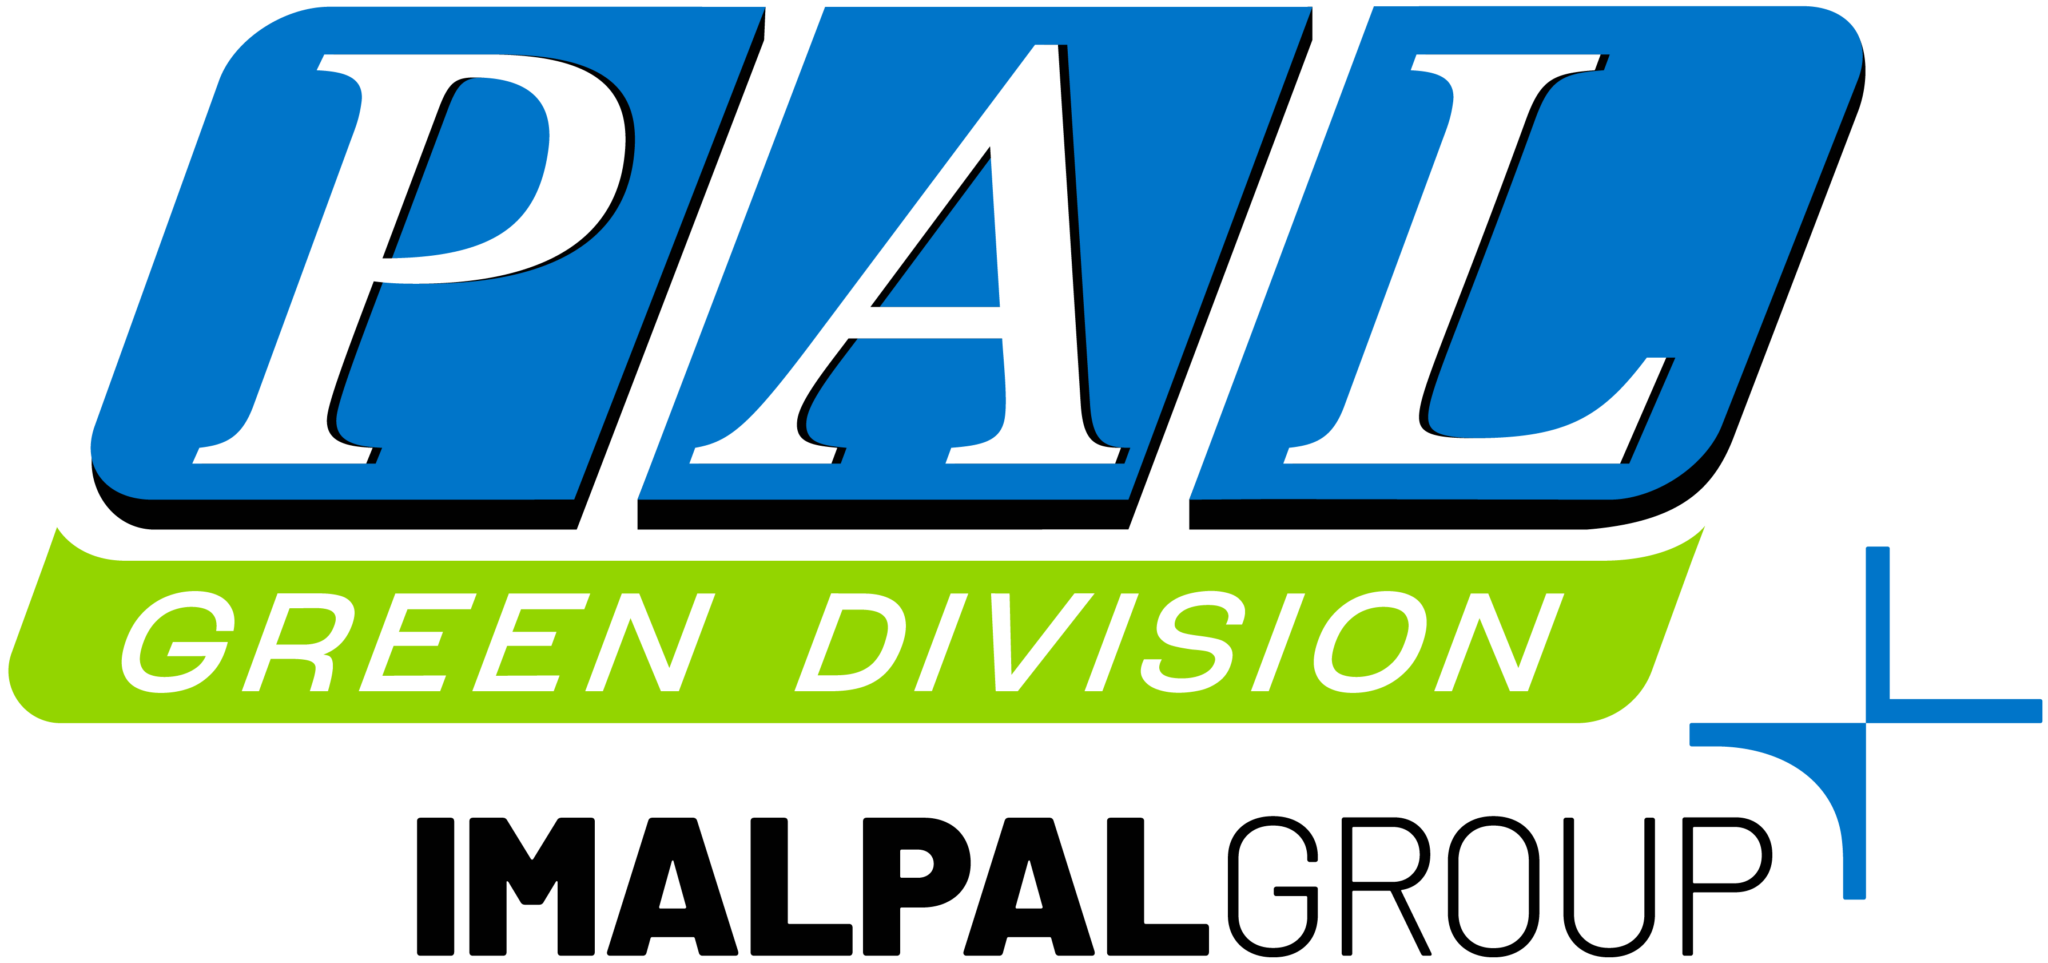 Pall logo